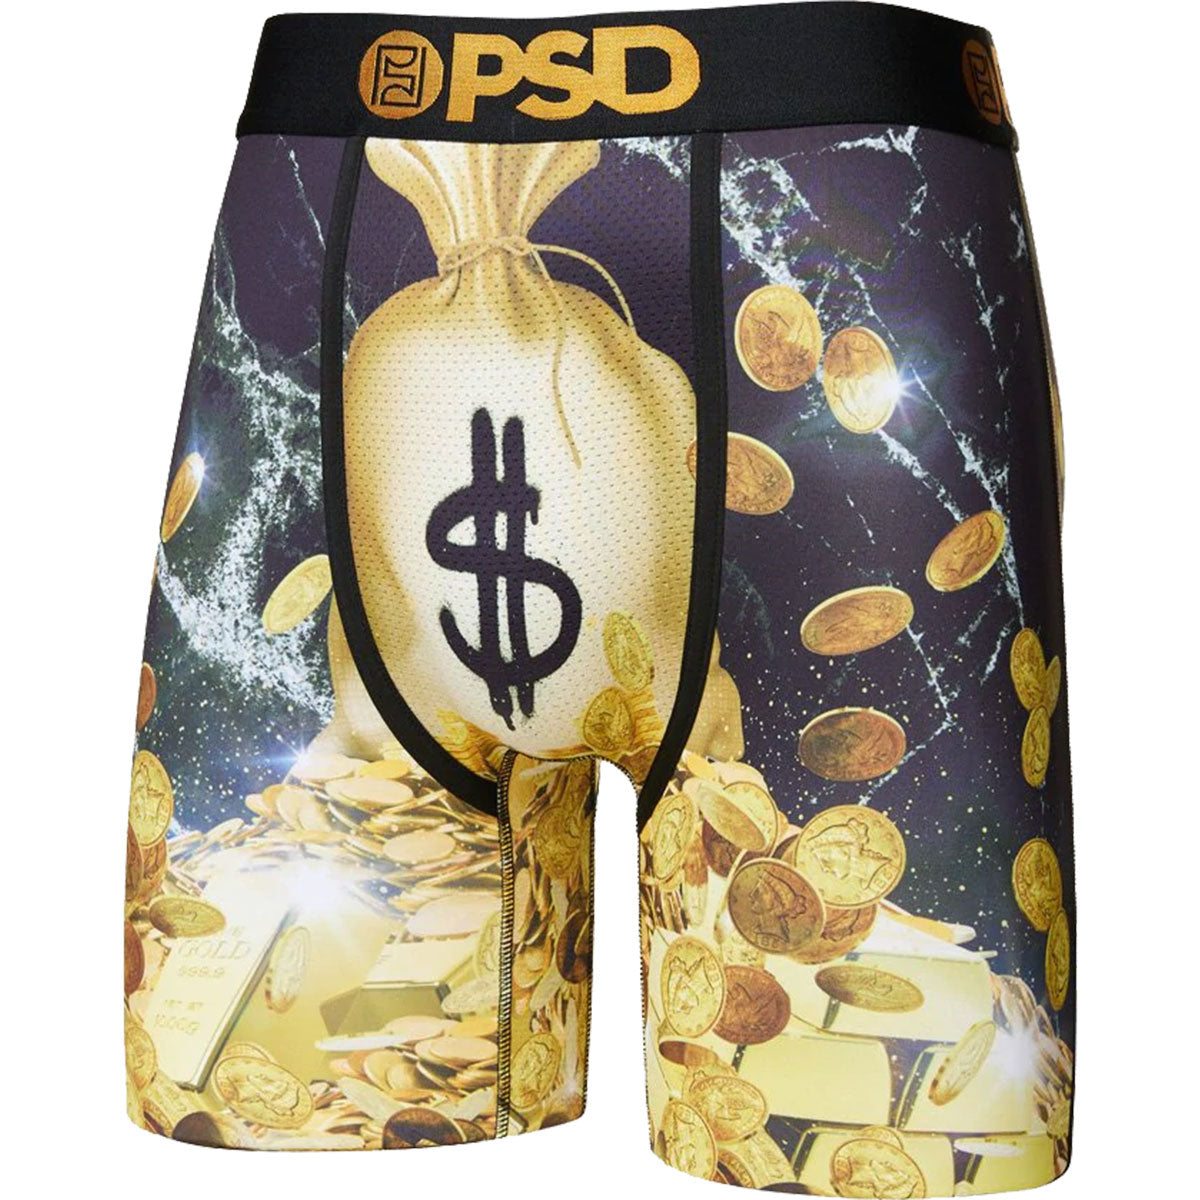 PSD My Bag Boxer Men's Bottom Underwear-421180036